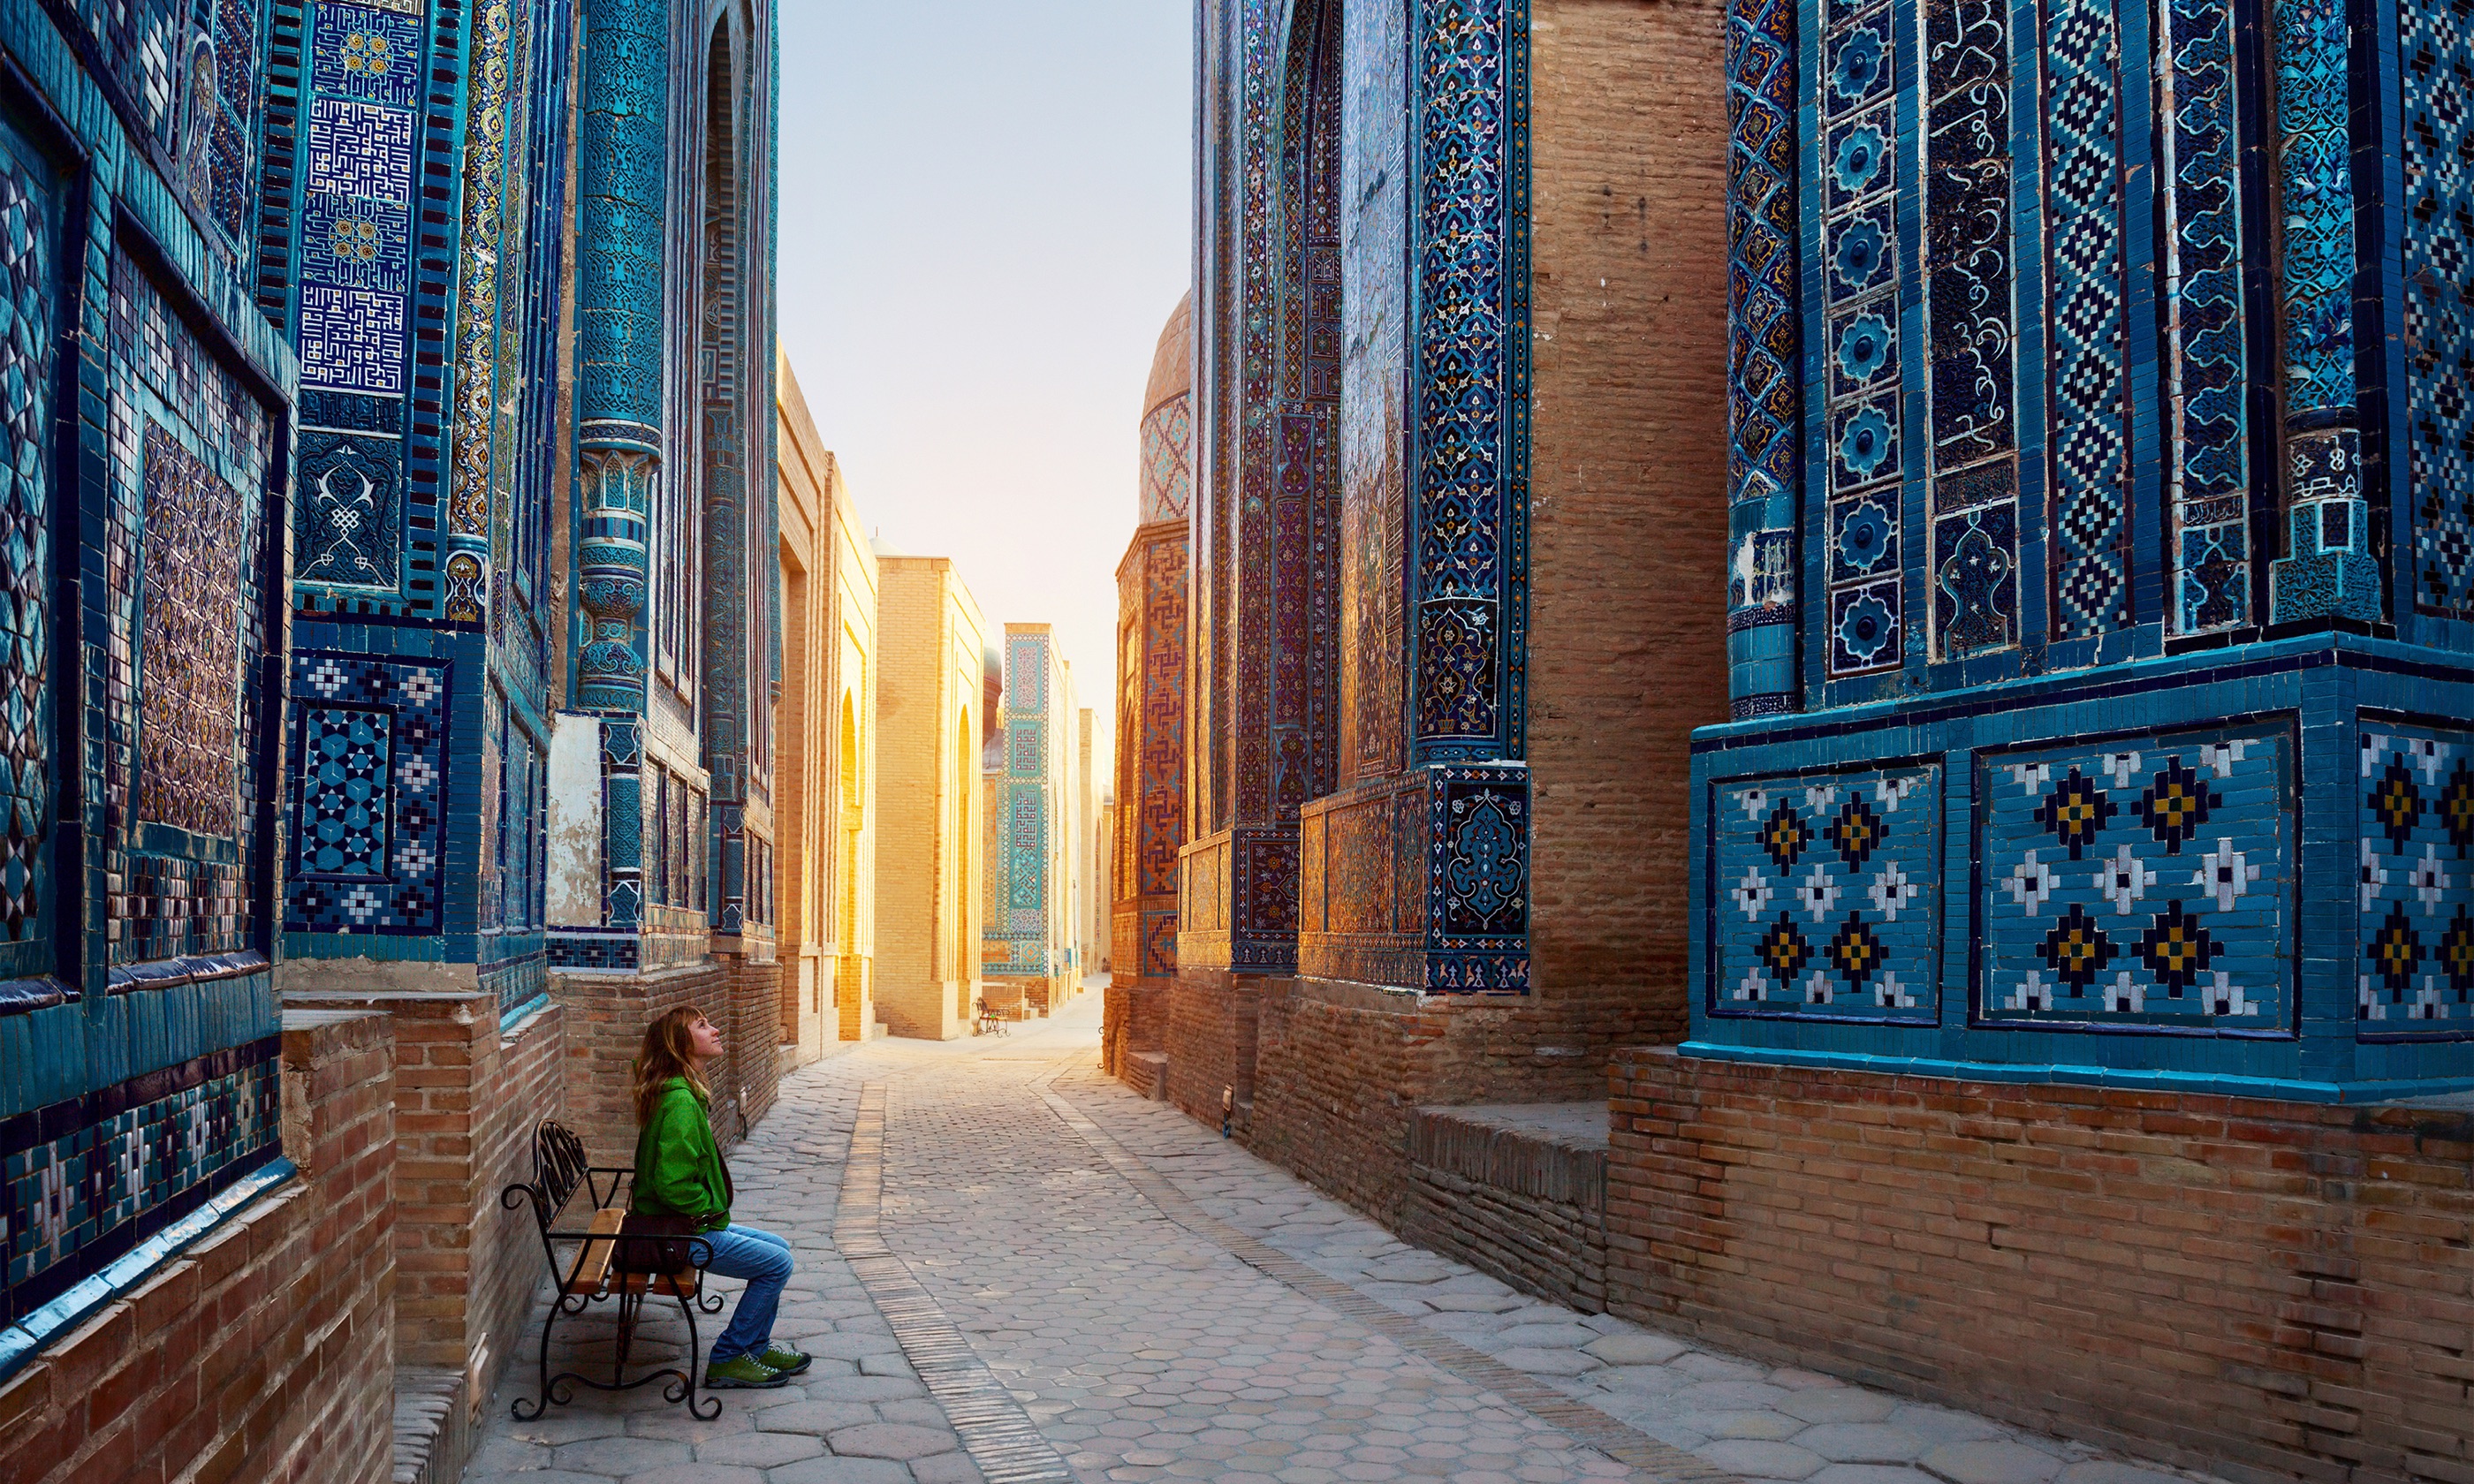 Contemplating another part of Samarkand (Shutterstock.com)